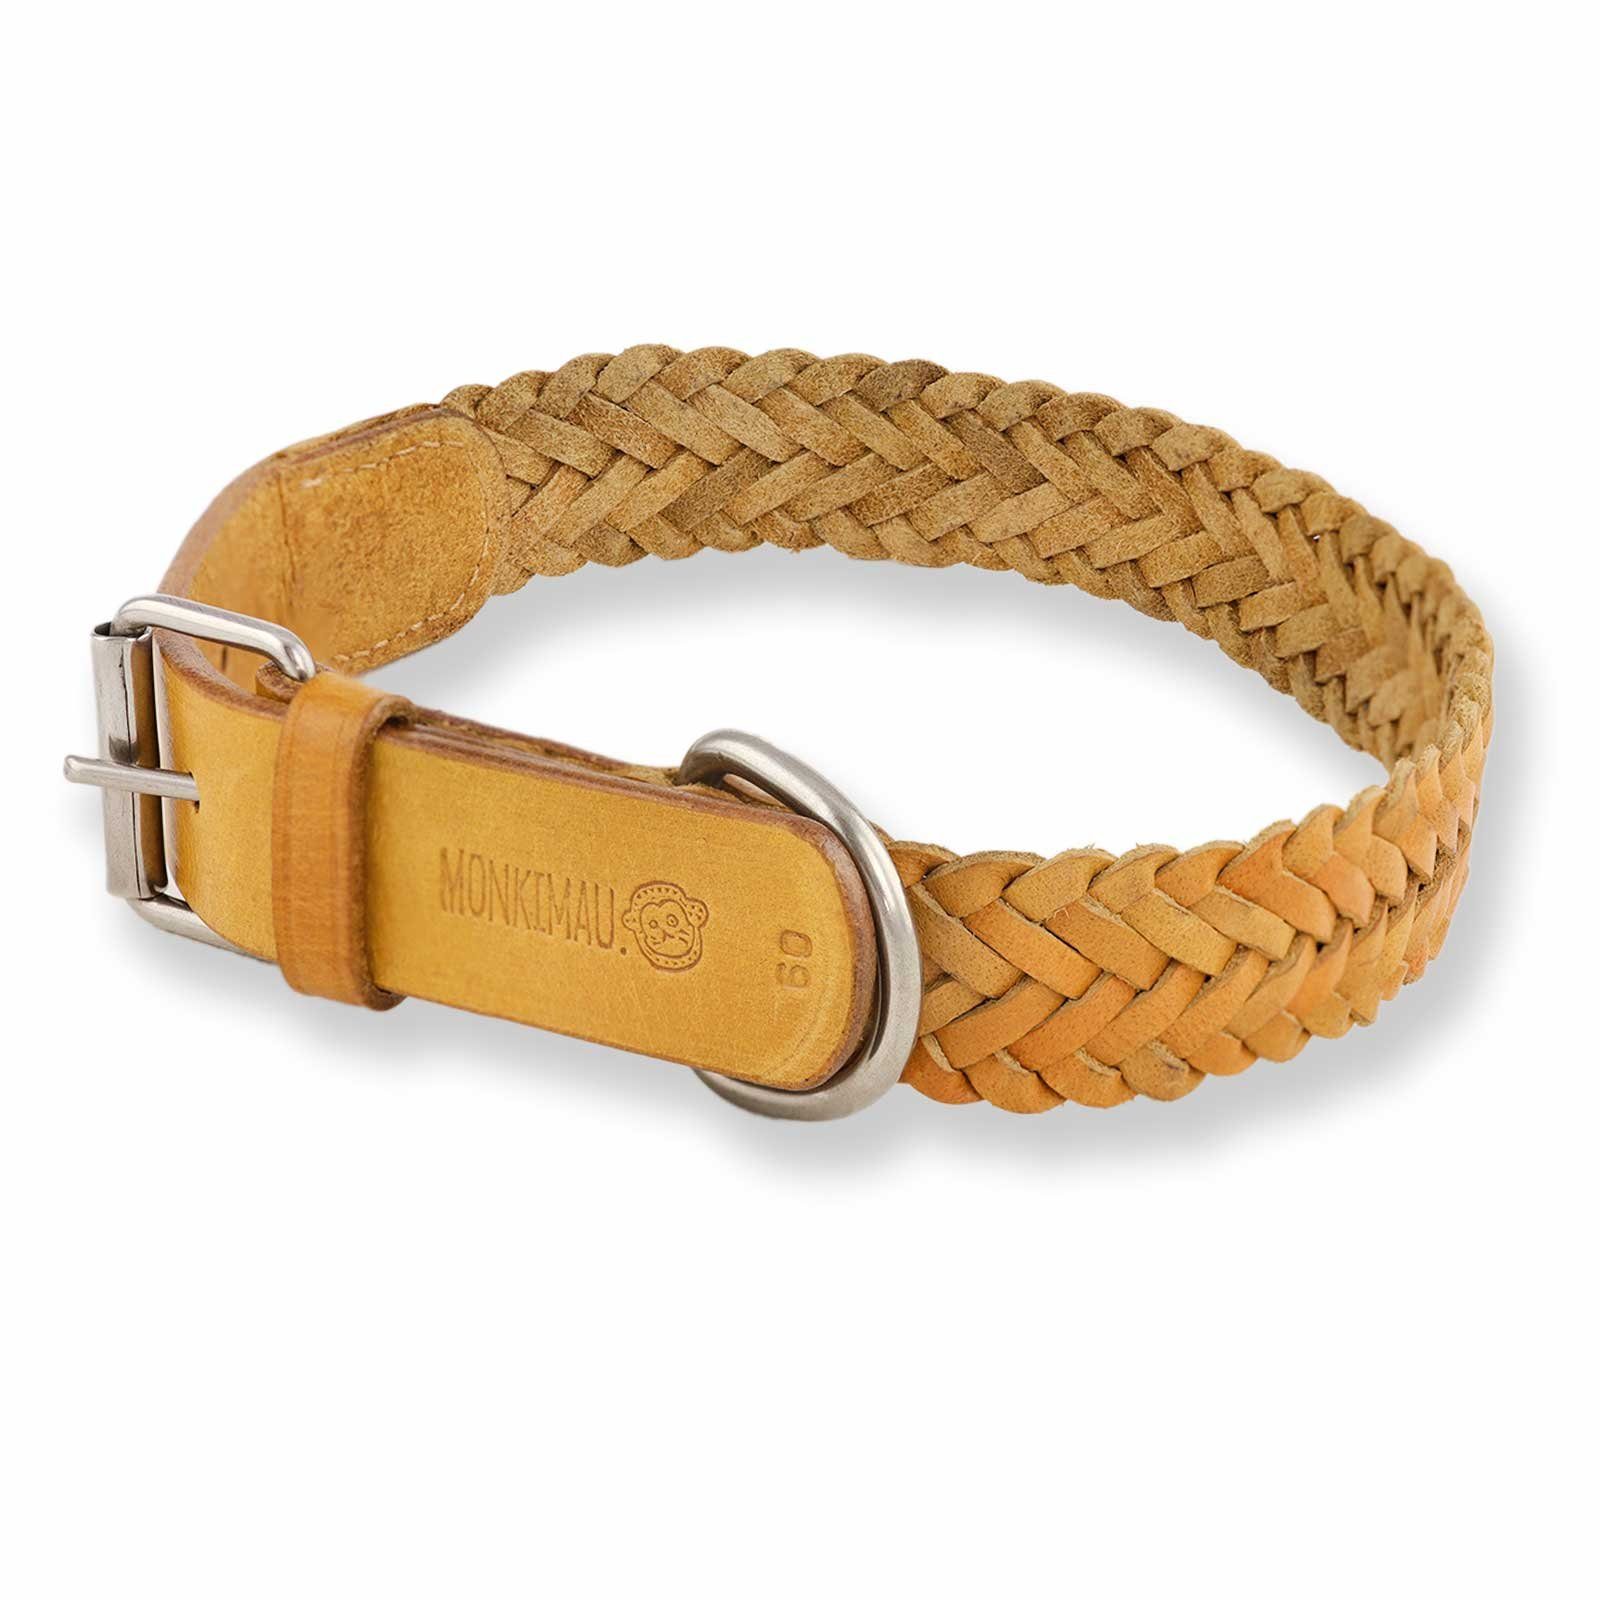 Monkimau Hunde-Halsband Hundehalsband aus Leder geflochten, Leder